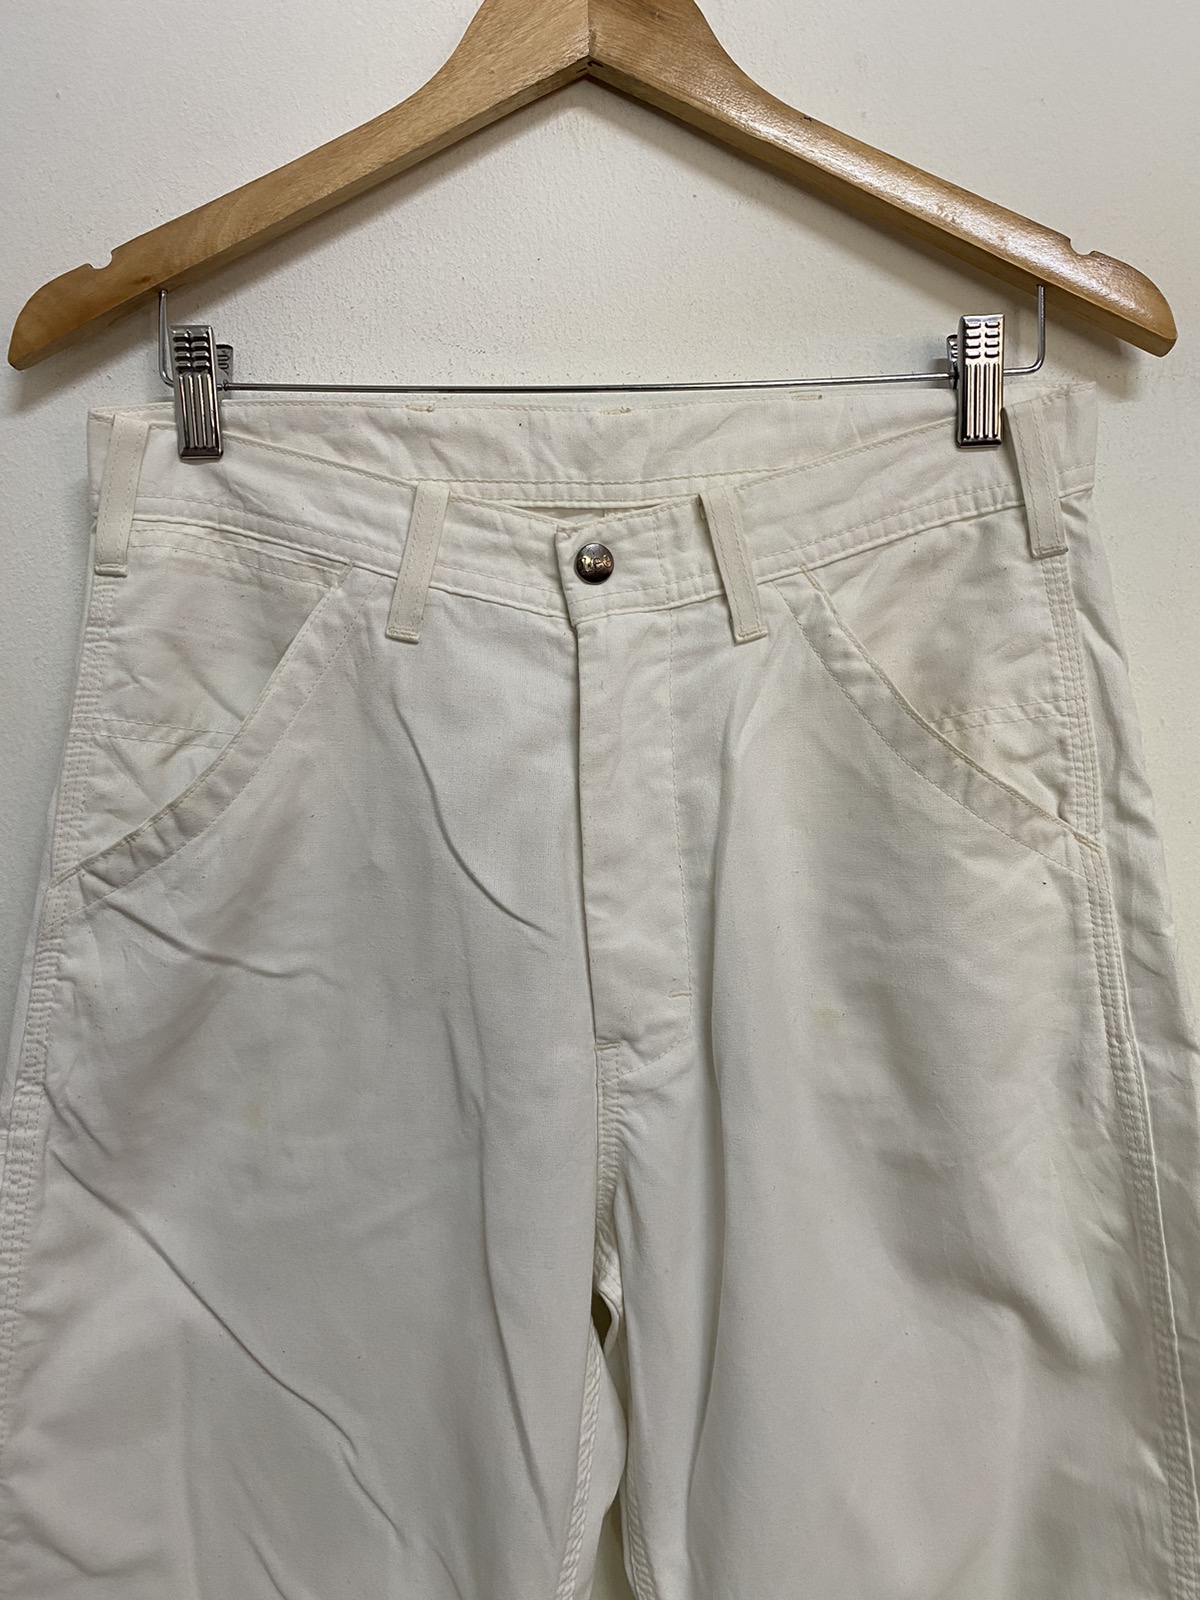 Lee X N Hollywood Carpenter Pants - 3